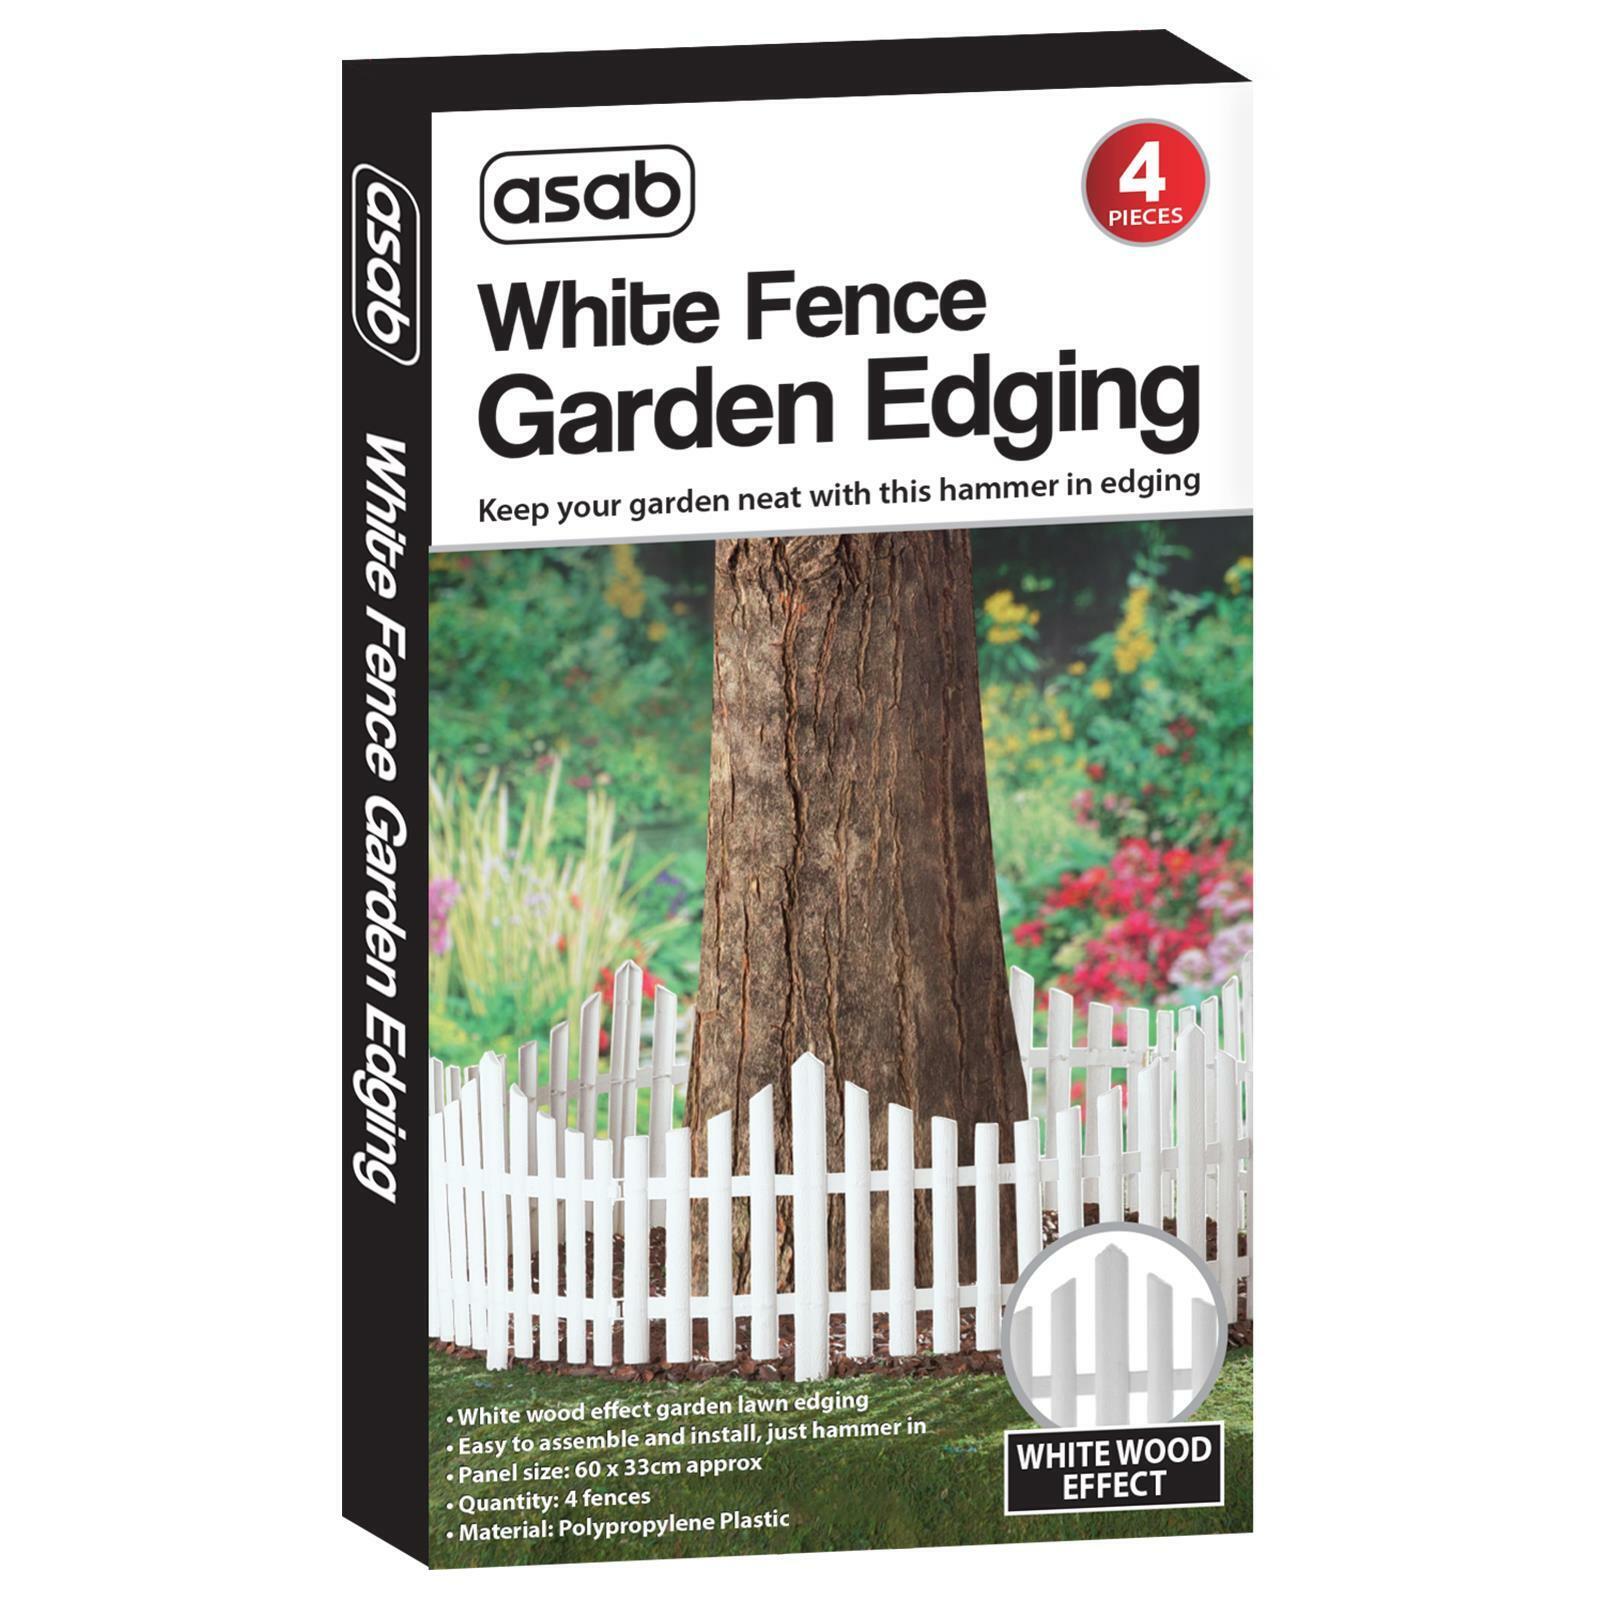 Smart White Wooden Effect Lawn Edge Border Edging Picket Fencing Garden Set of 4